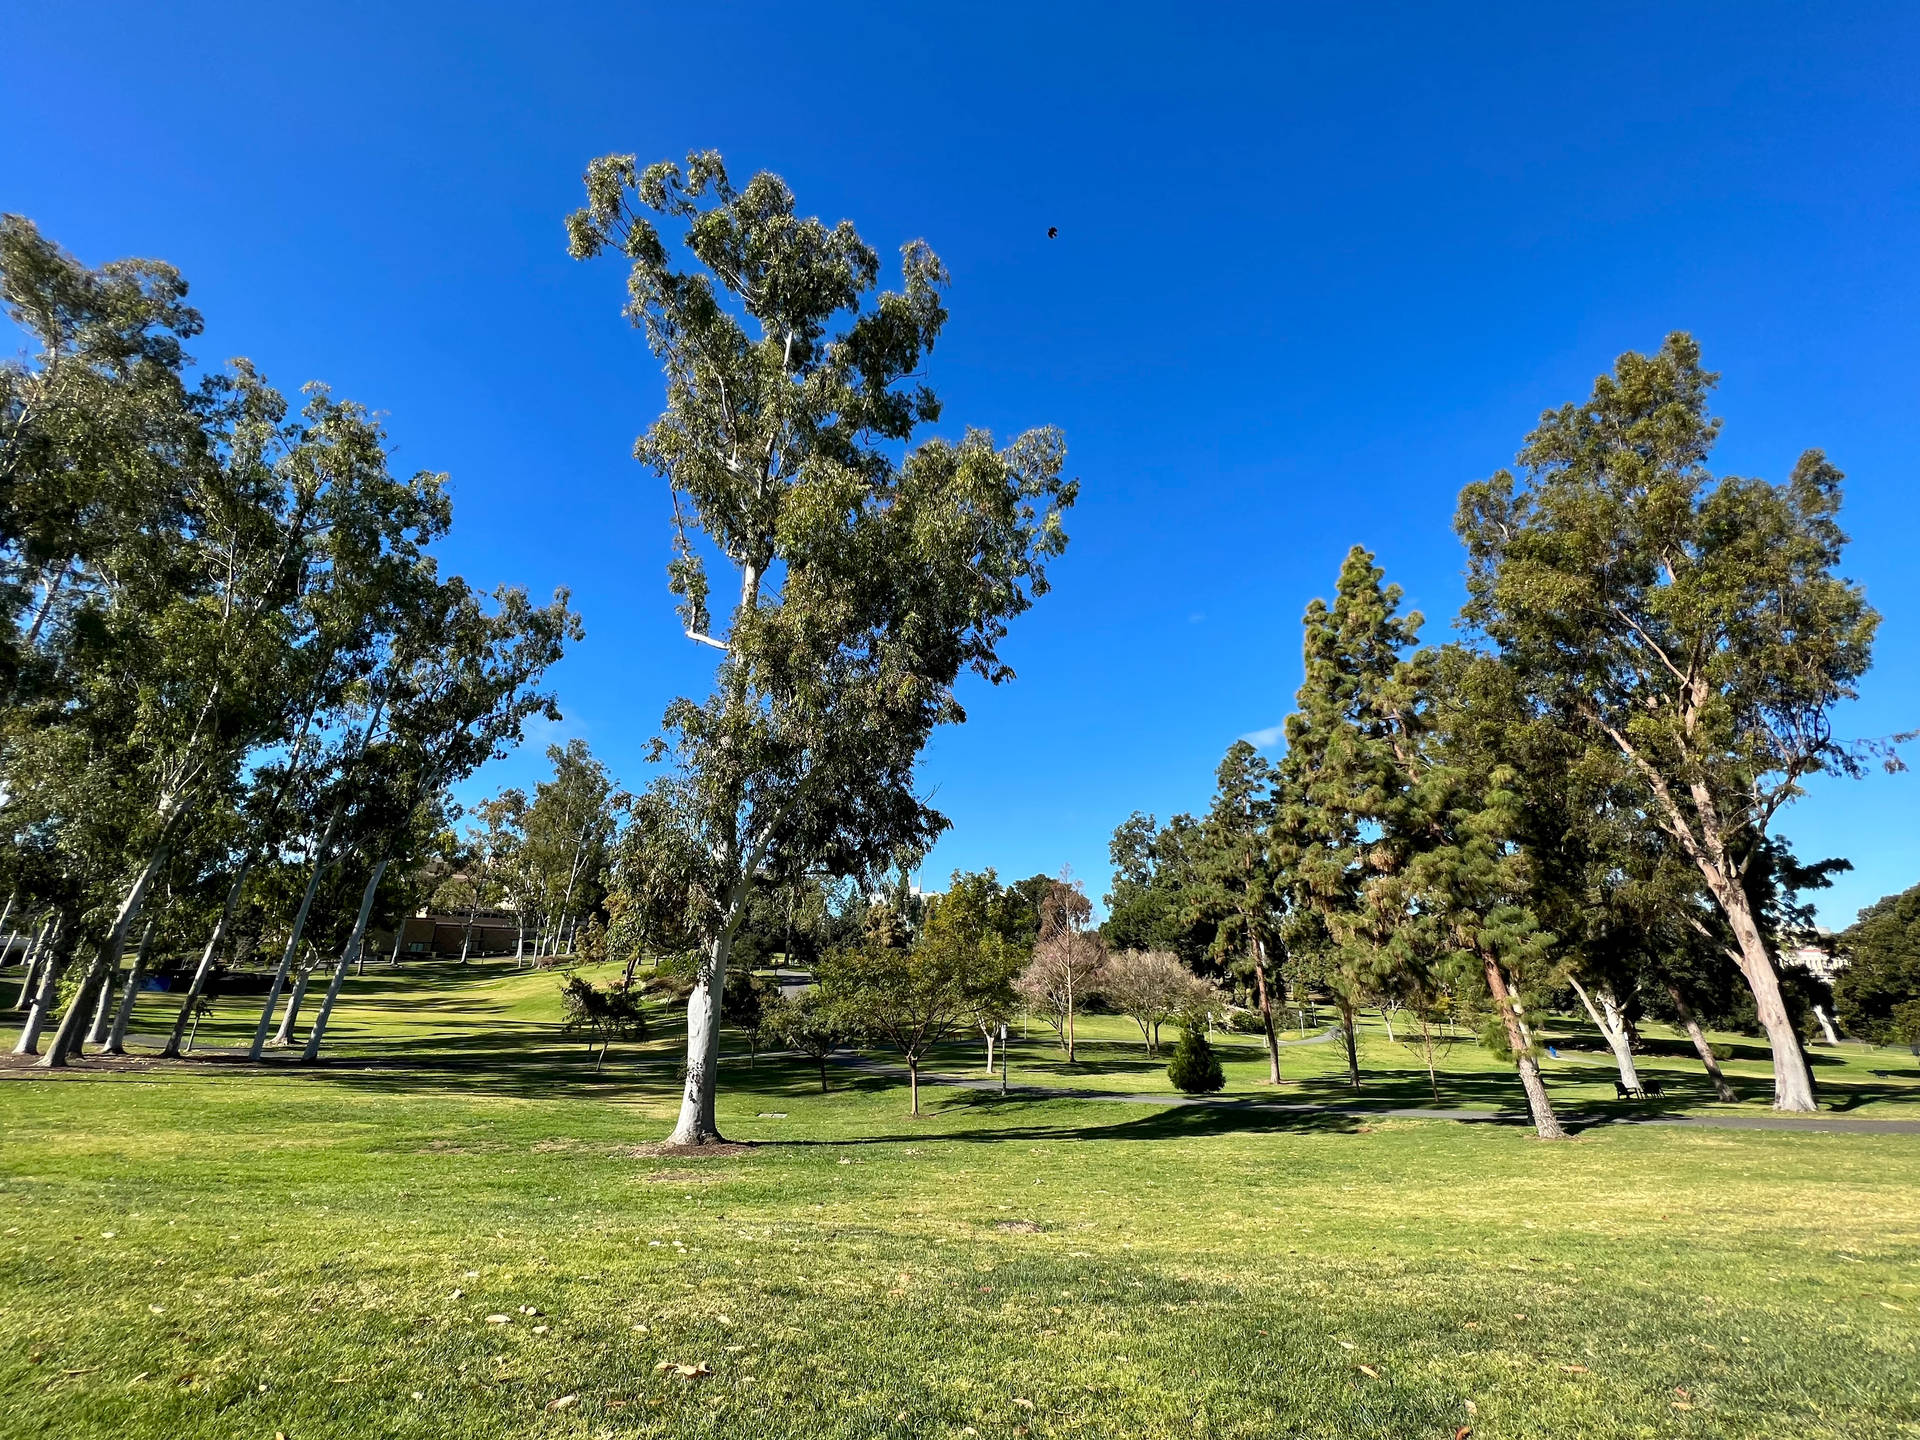 University Grounds With Eucalyptus Trees Background